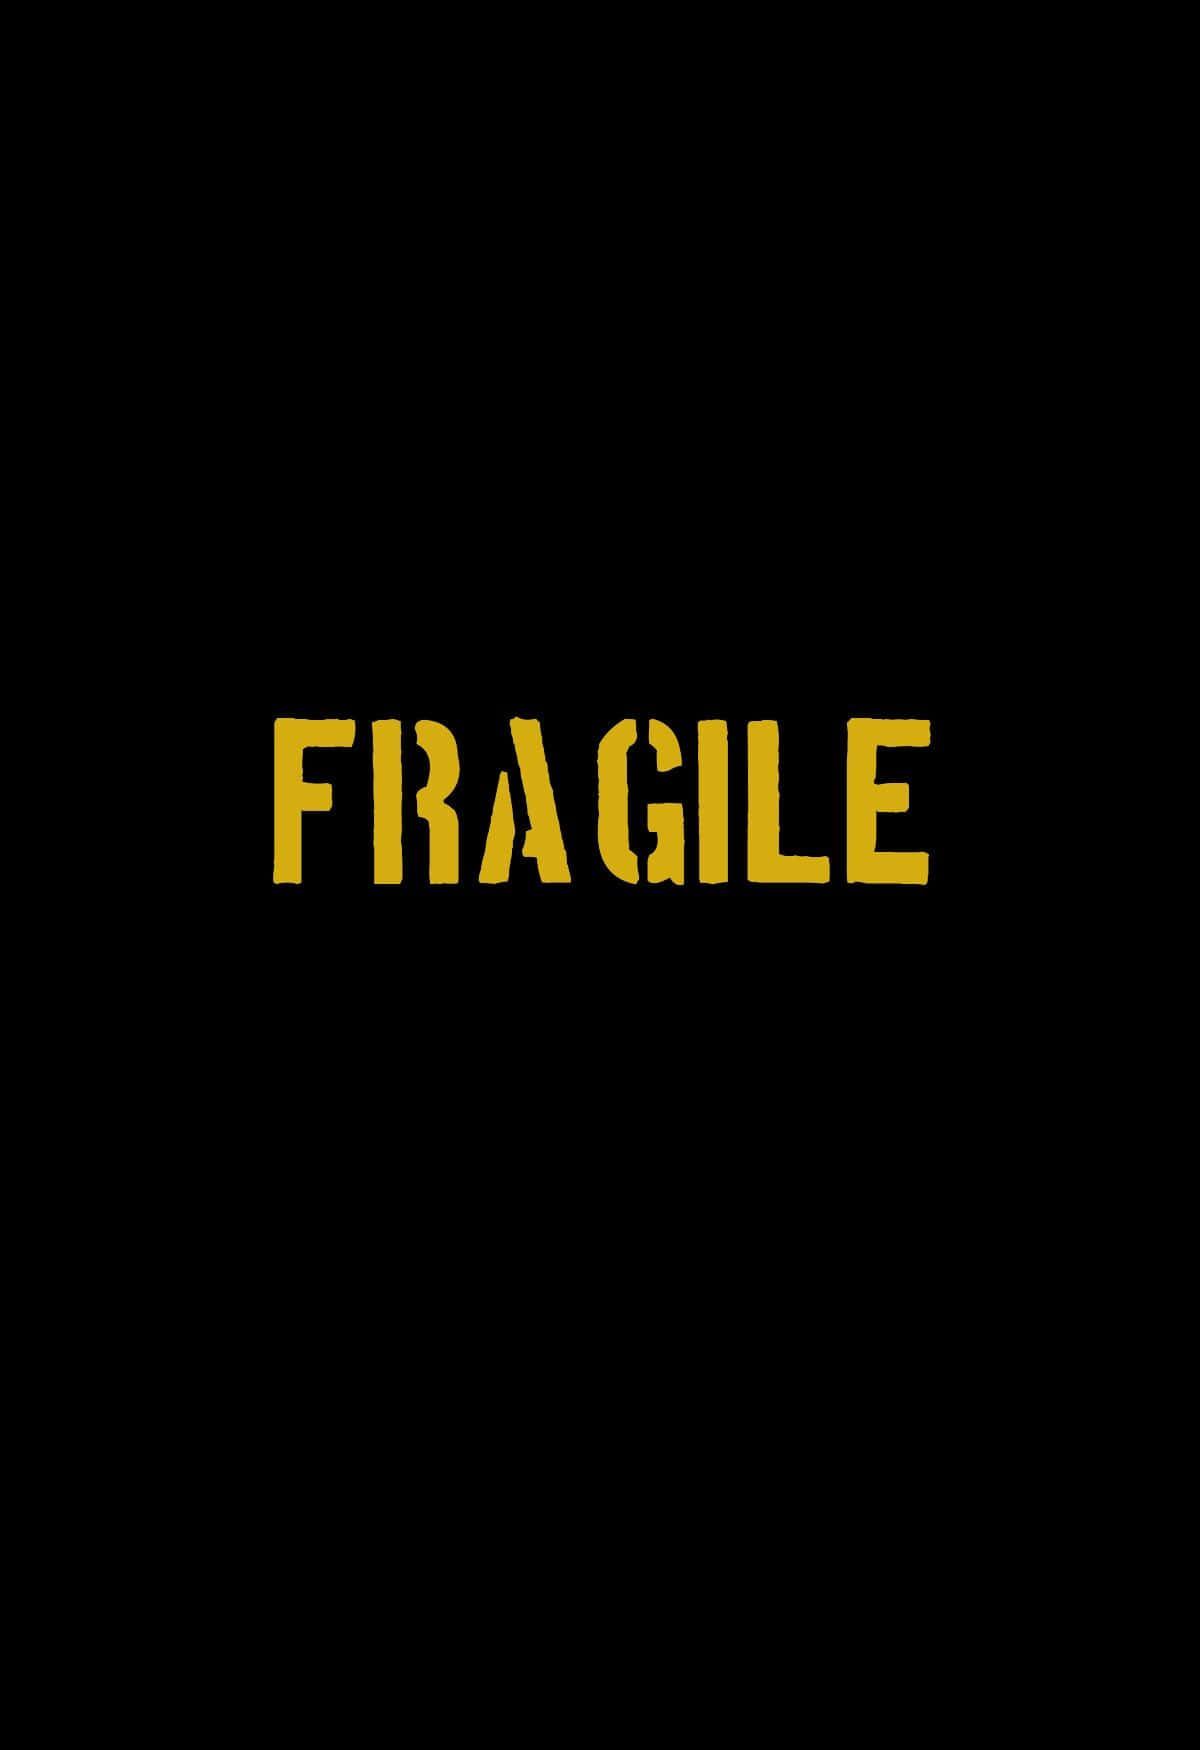 Fragile Typography Wallpaper